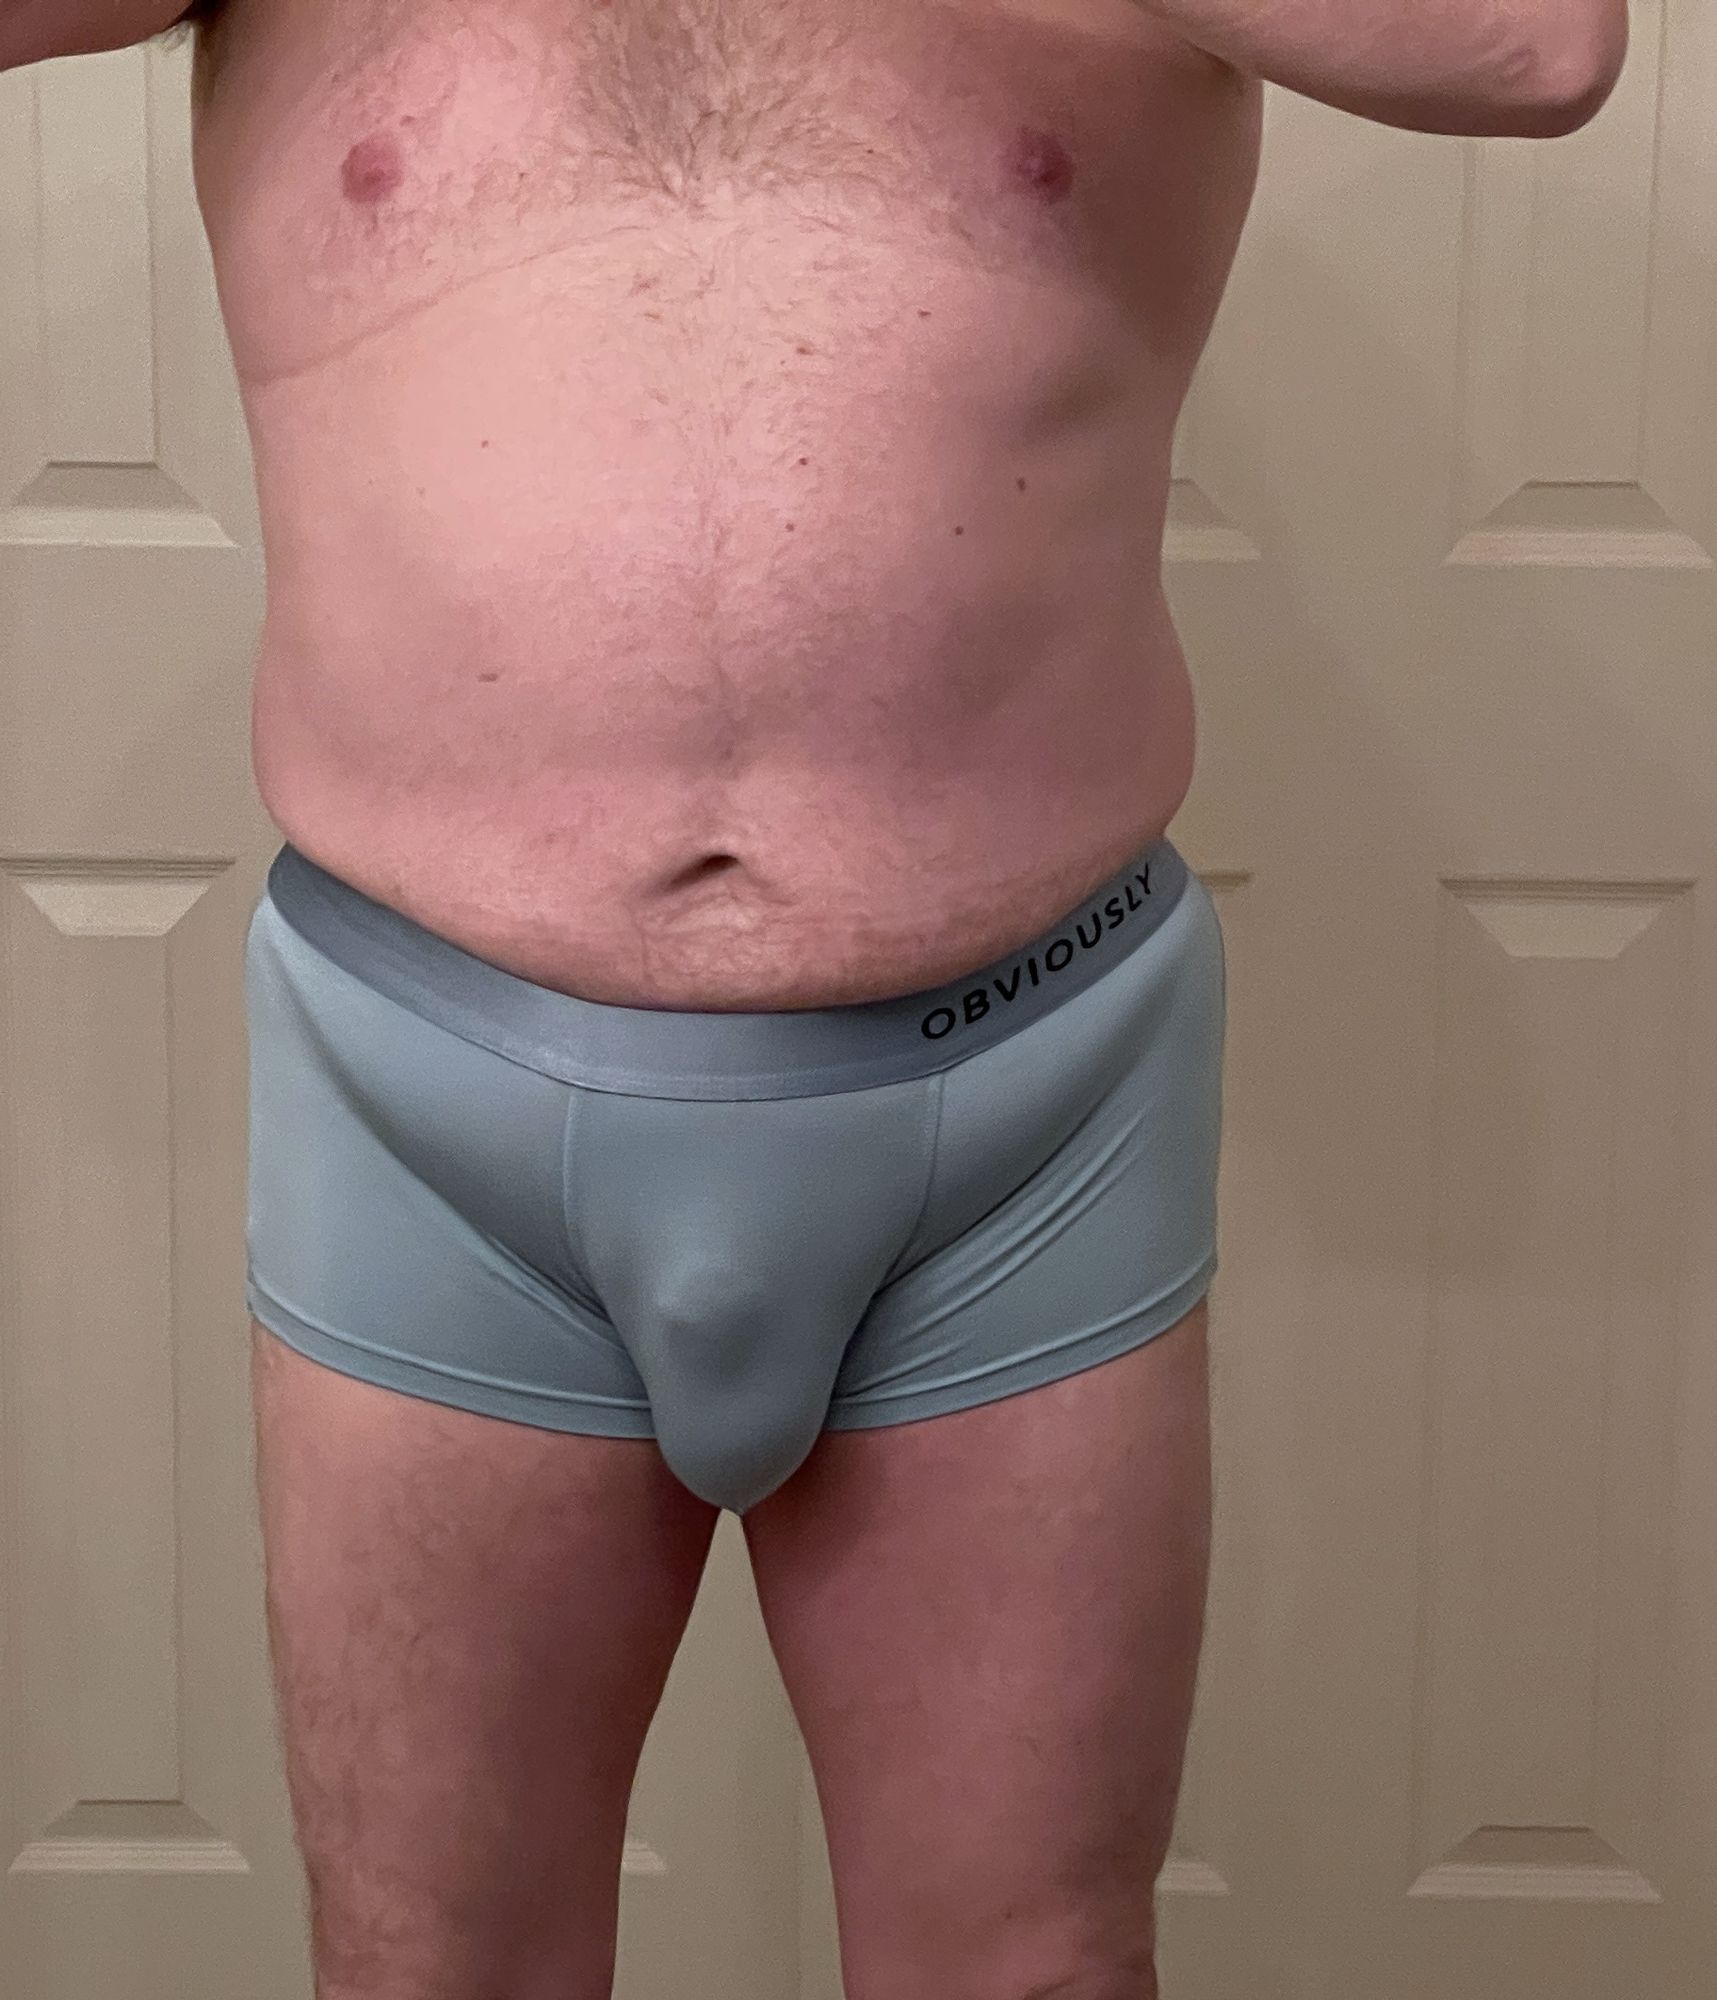 Chubby Guy in Underwear #33